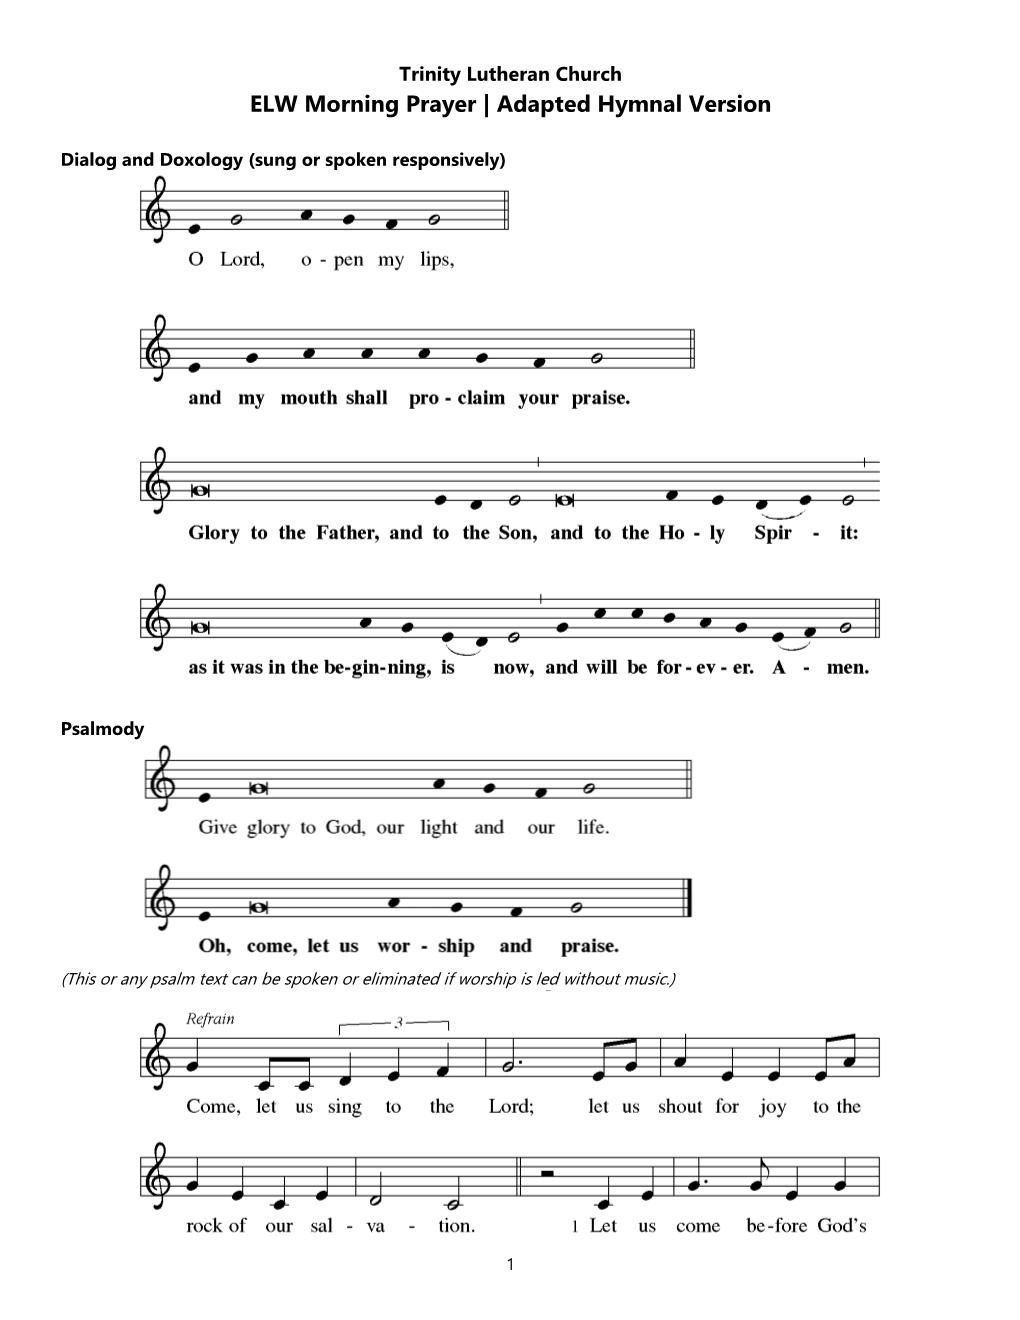 ELW Morning Prayer | Adapted Hymnal Version